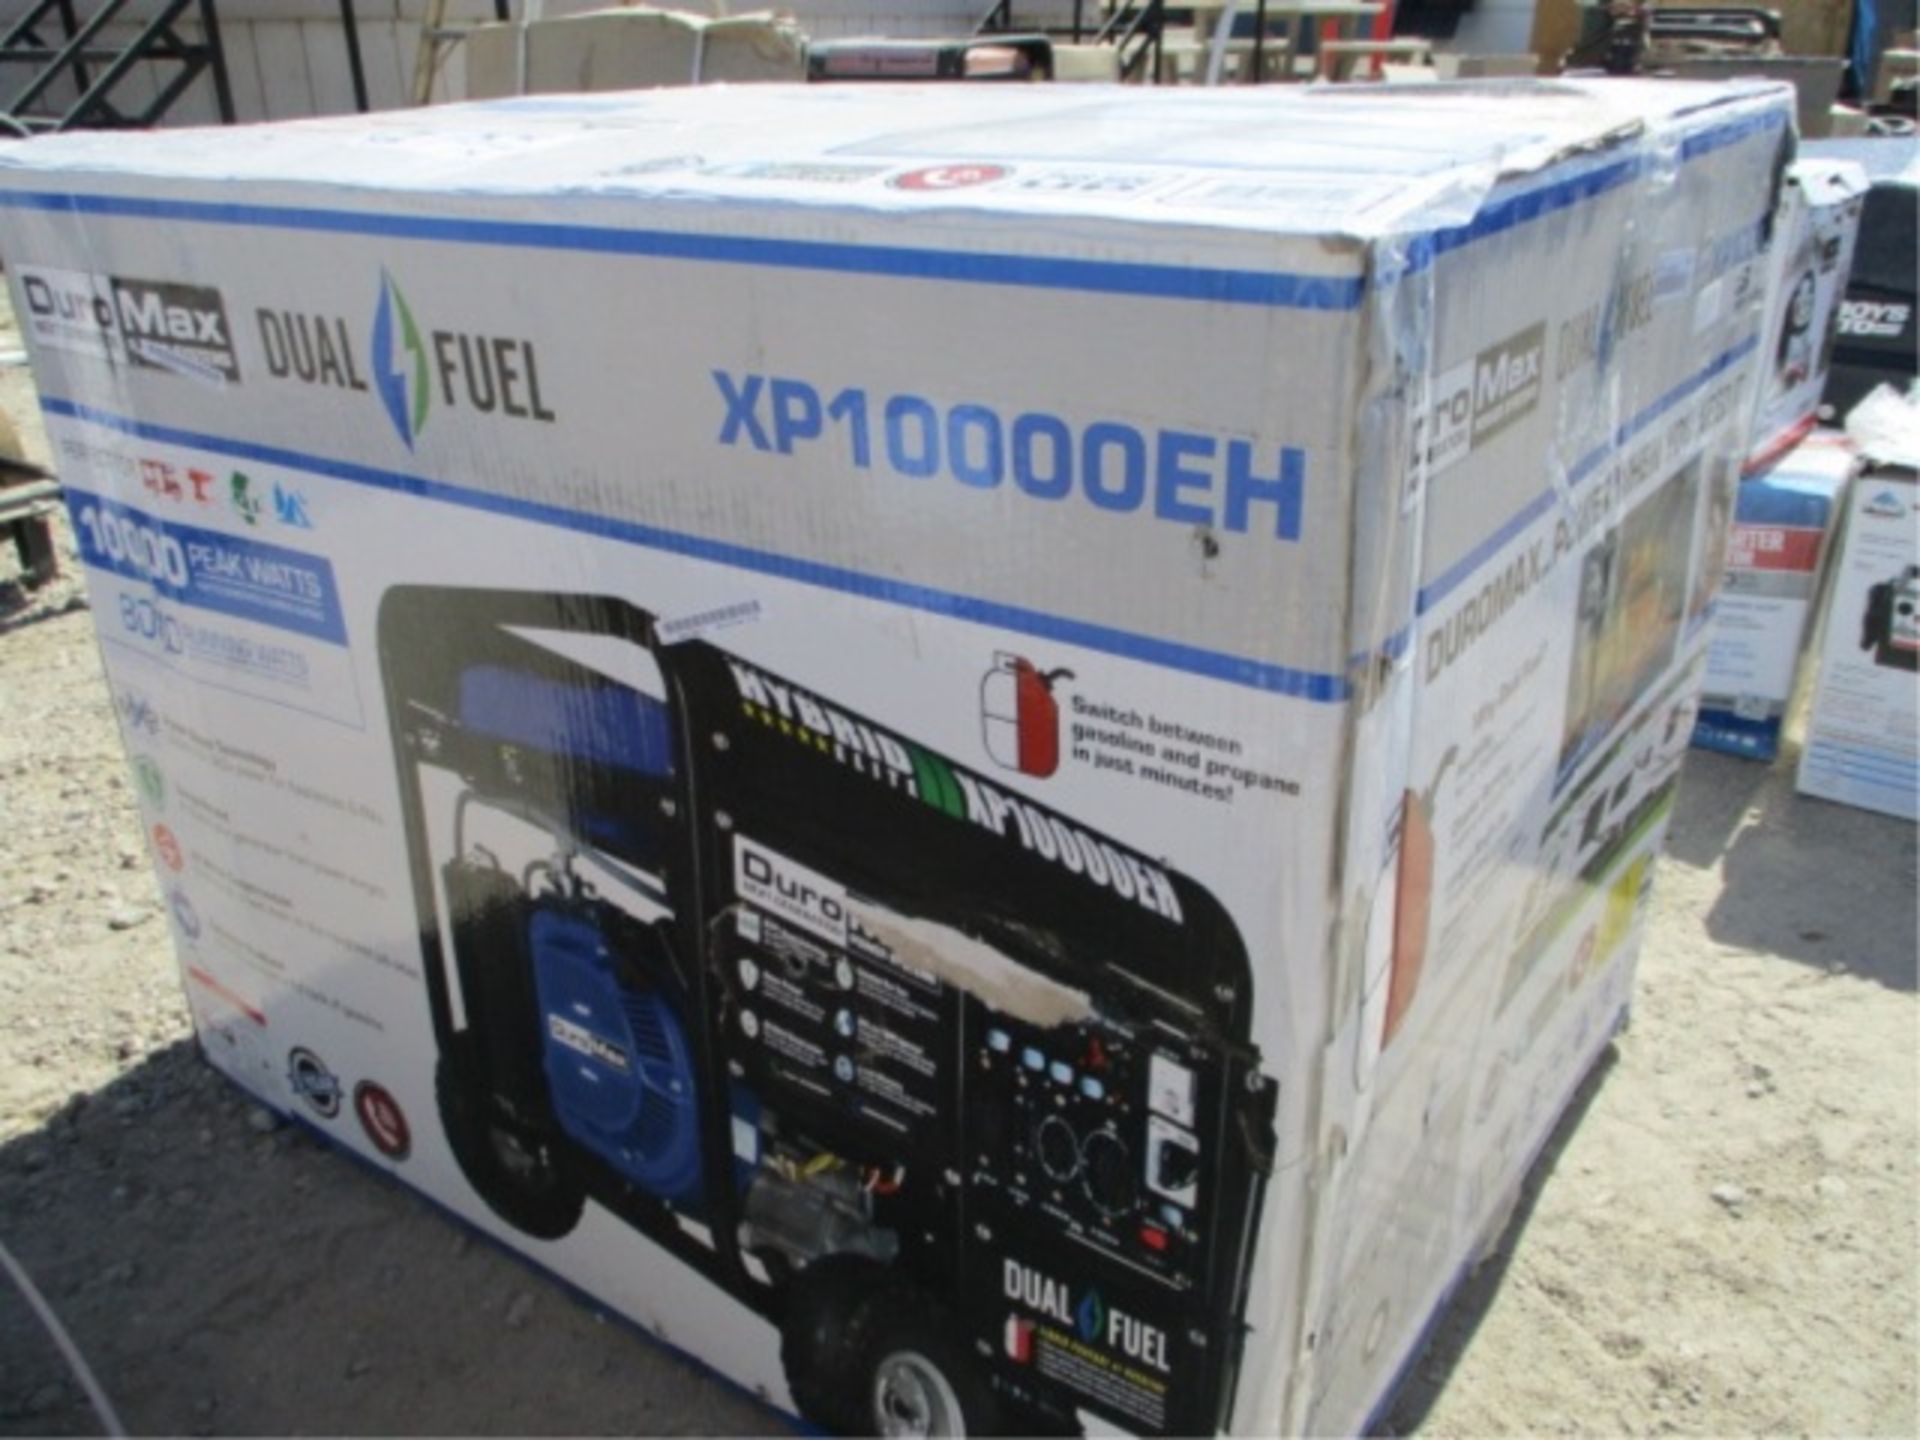 Duromax XP1000EH Dual Fuel Generator, 10,000 Watts